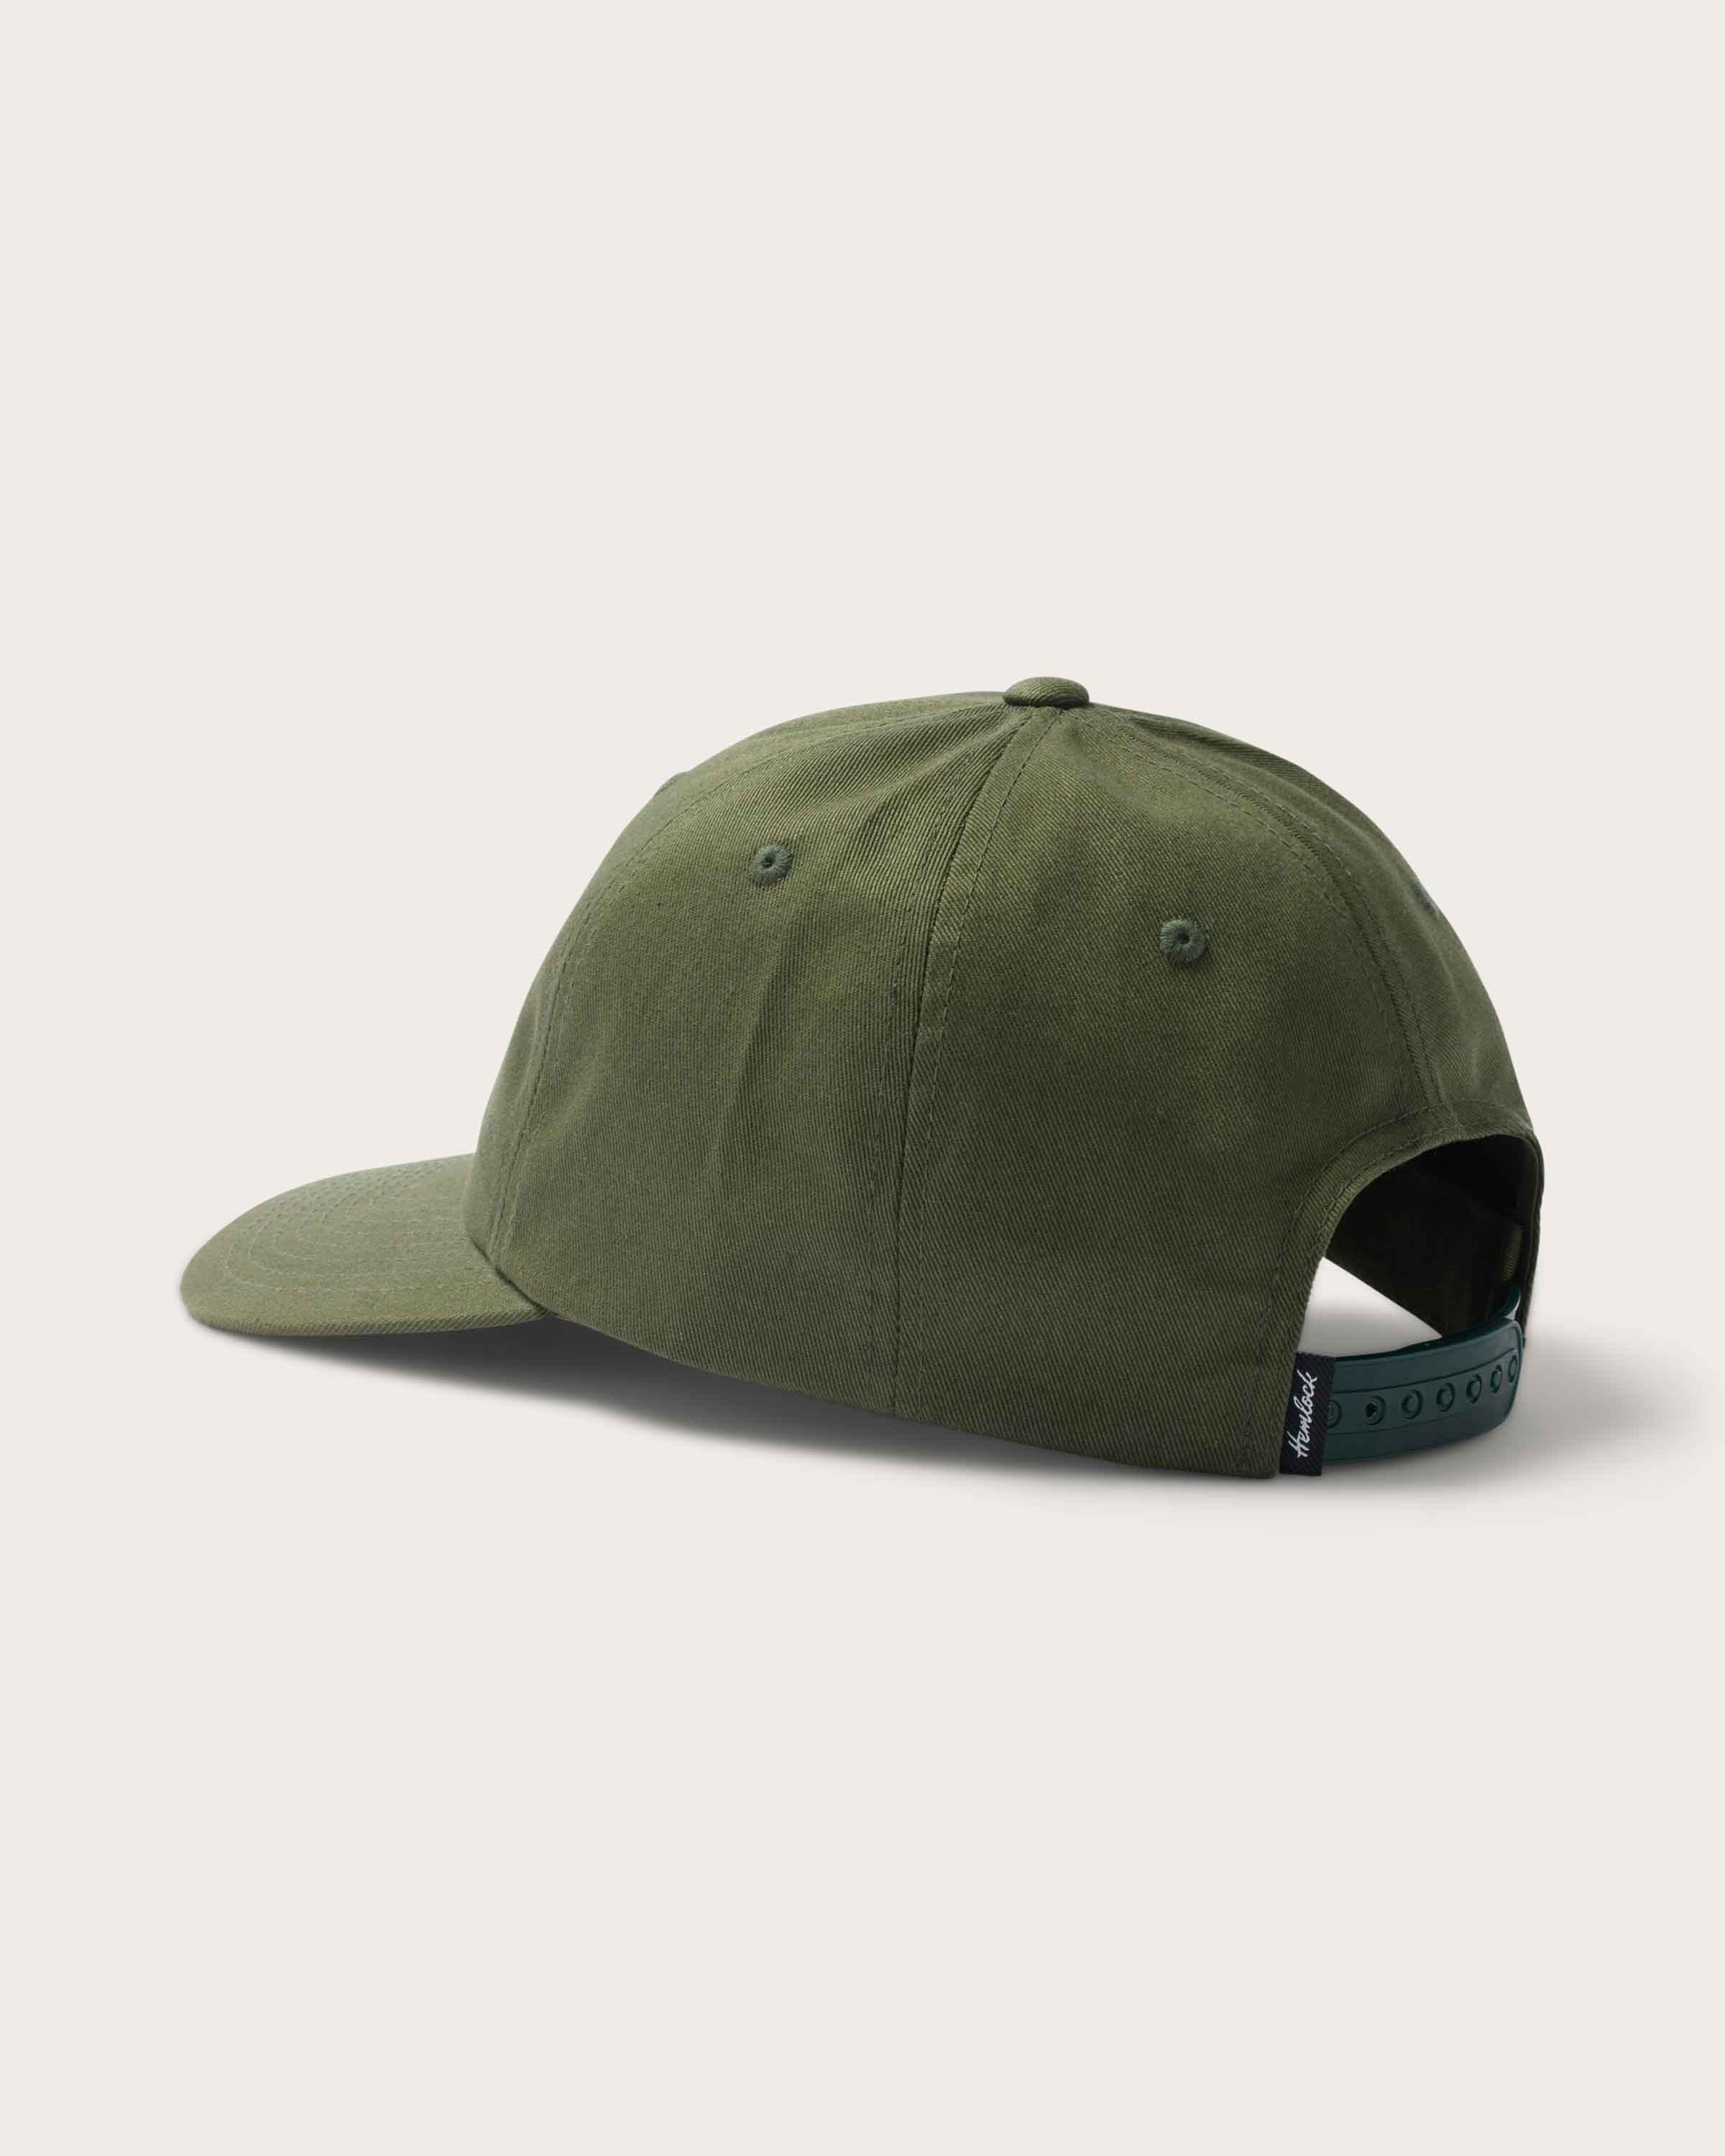 Vista Cap in Olive - undefined - Hemlock Hat Co. Ball Caps